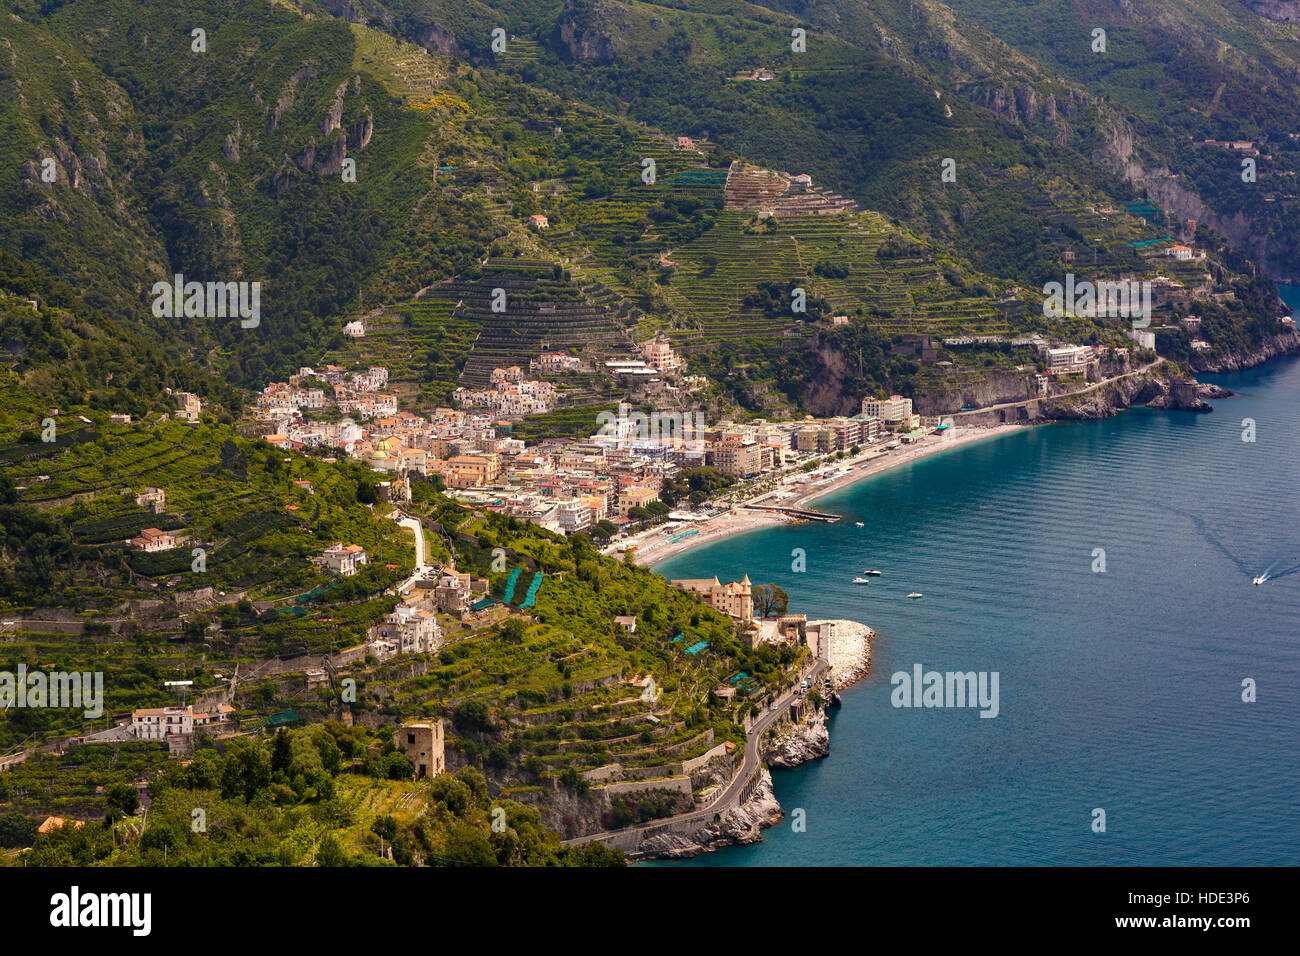 The Amalfi coast town of Maiori and the Bay of Salerna, Campania, Italy. Stock Photo